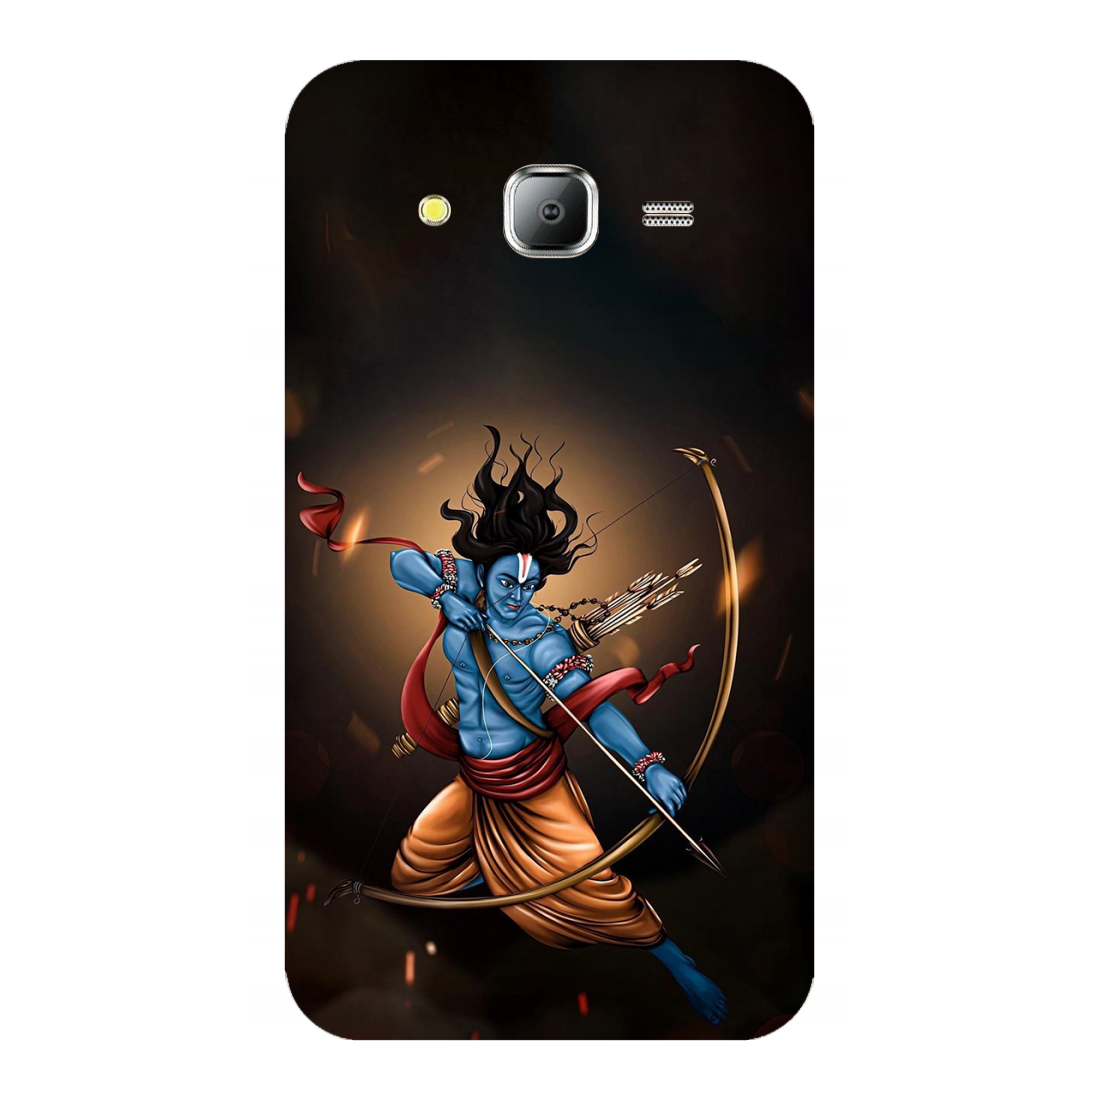 Warrior with Bow in Mystical Light Case Samsung Galaxy J7(2015)